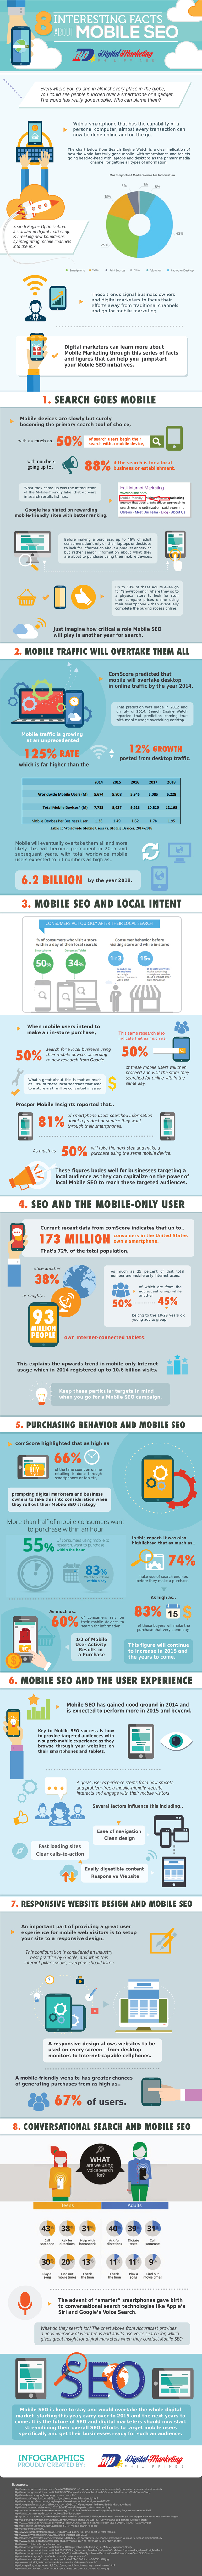 Mobile SEO infographic